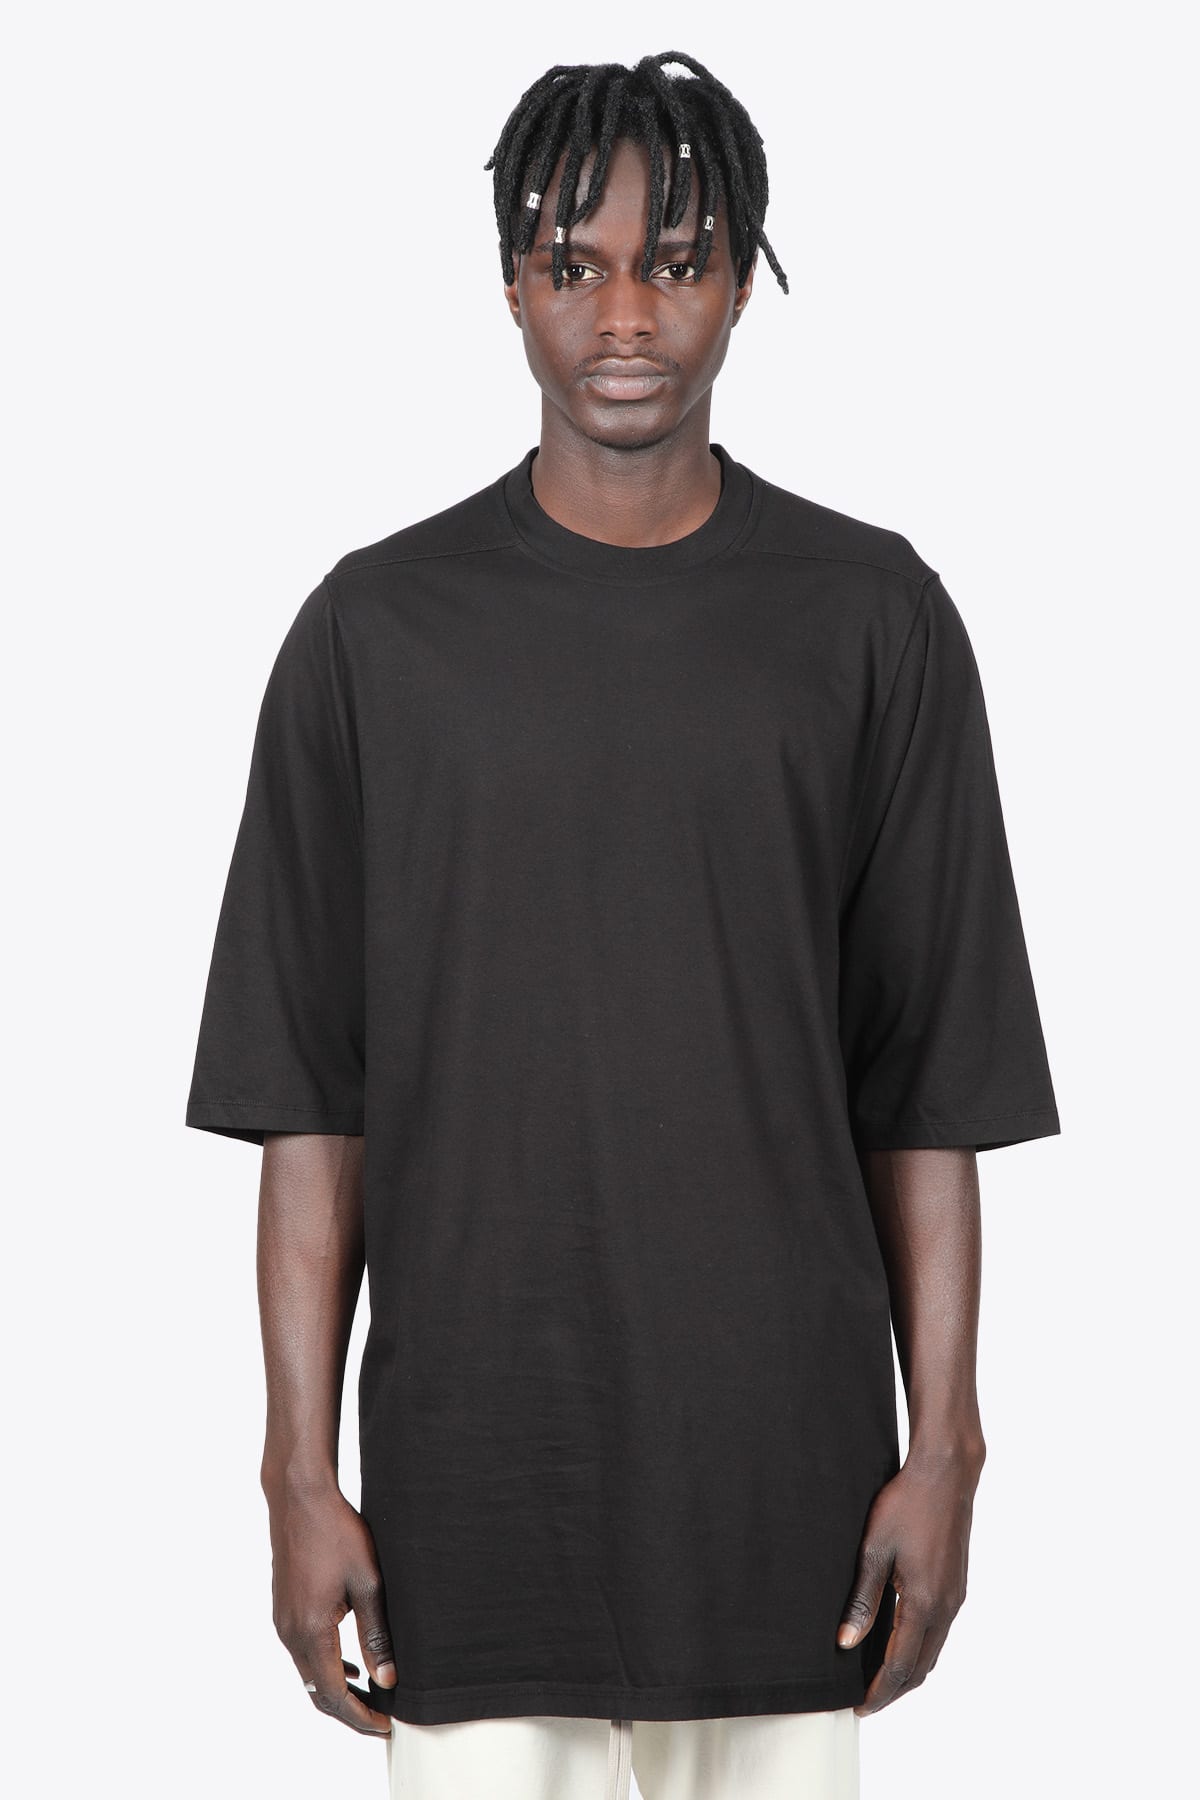 DRKSHDW Jumbo Ss T Black cotton oversized t-shirt - Jumbo ss t